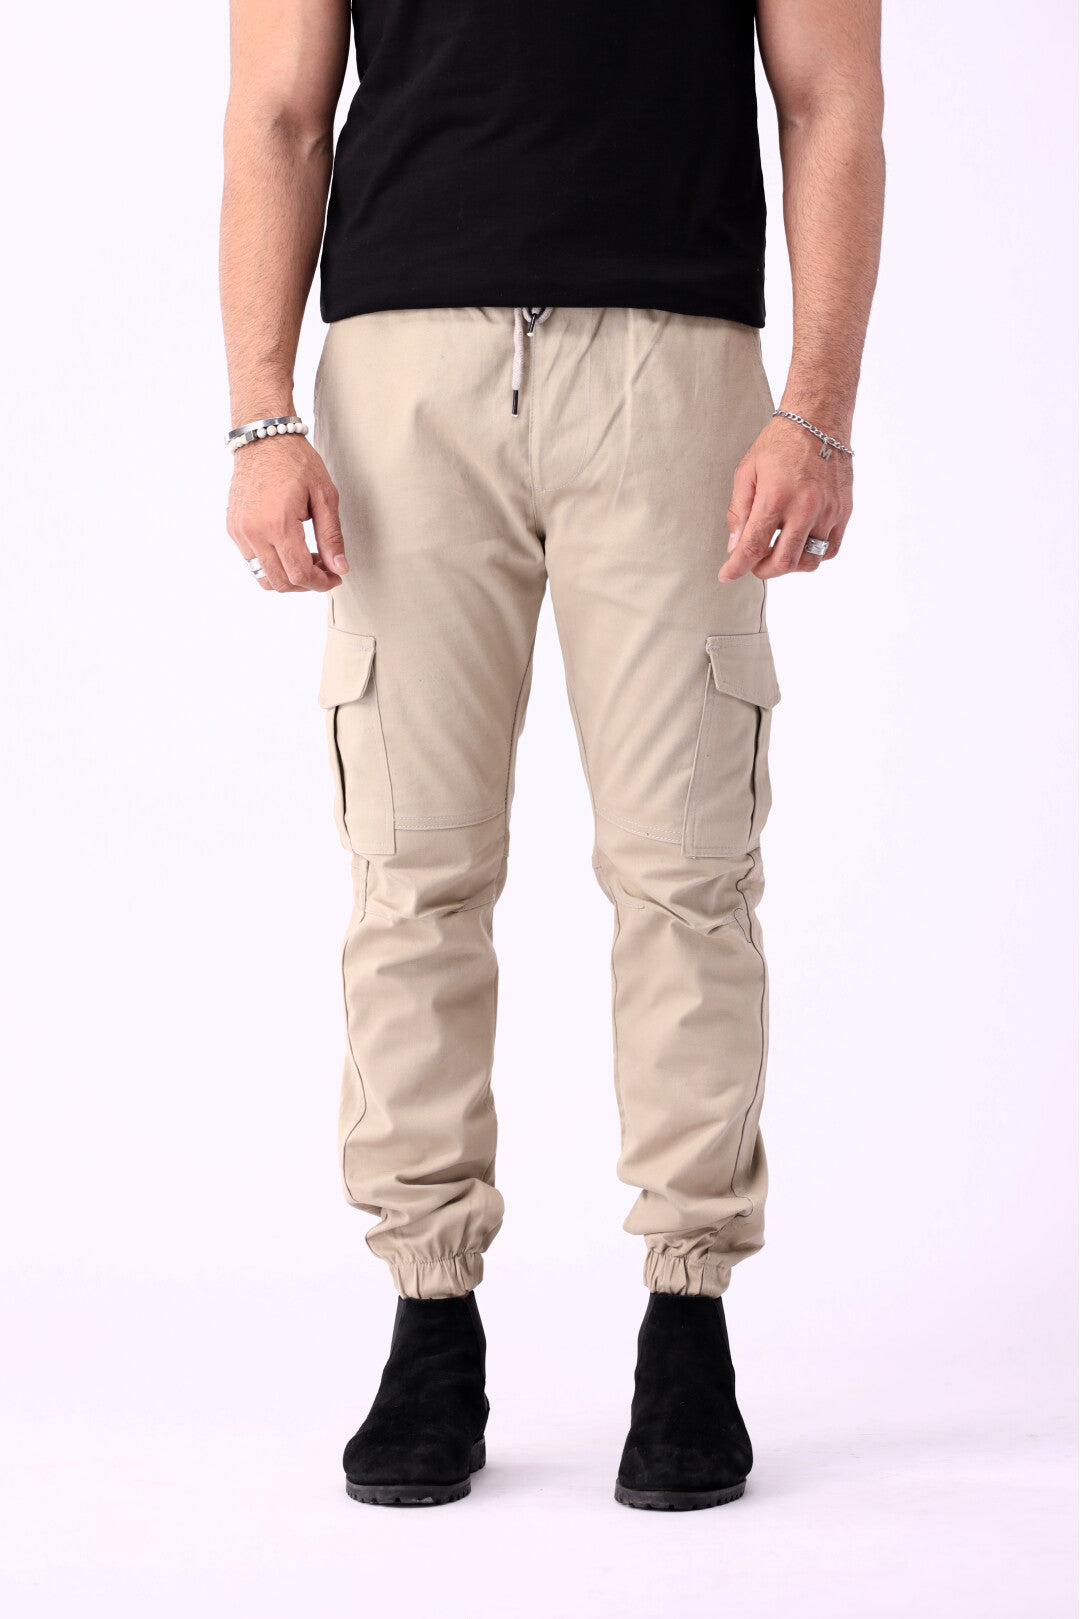 Six Pocket Cargo Trousers Light Pink for Men - 6 Pocket Cargo Pant